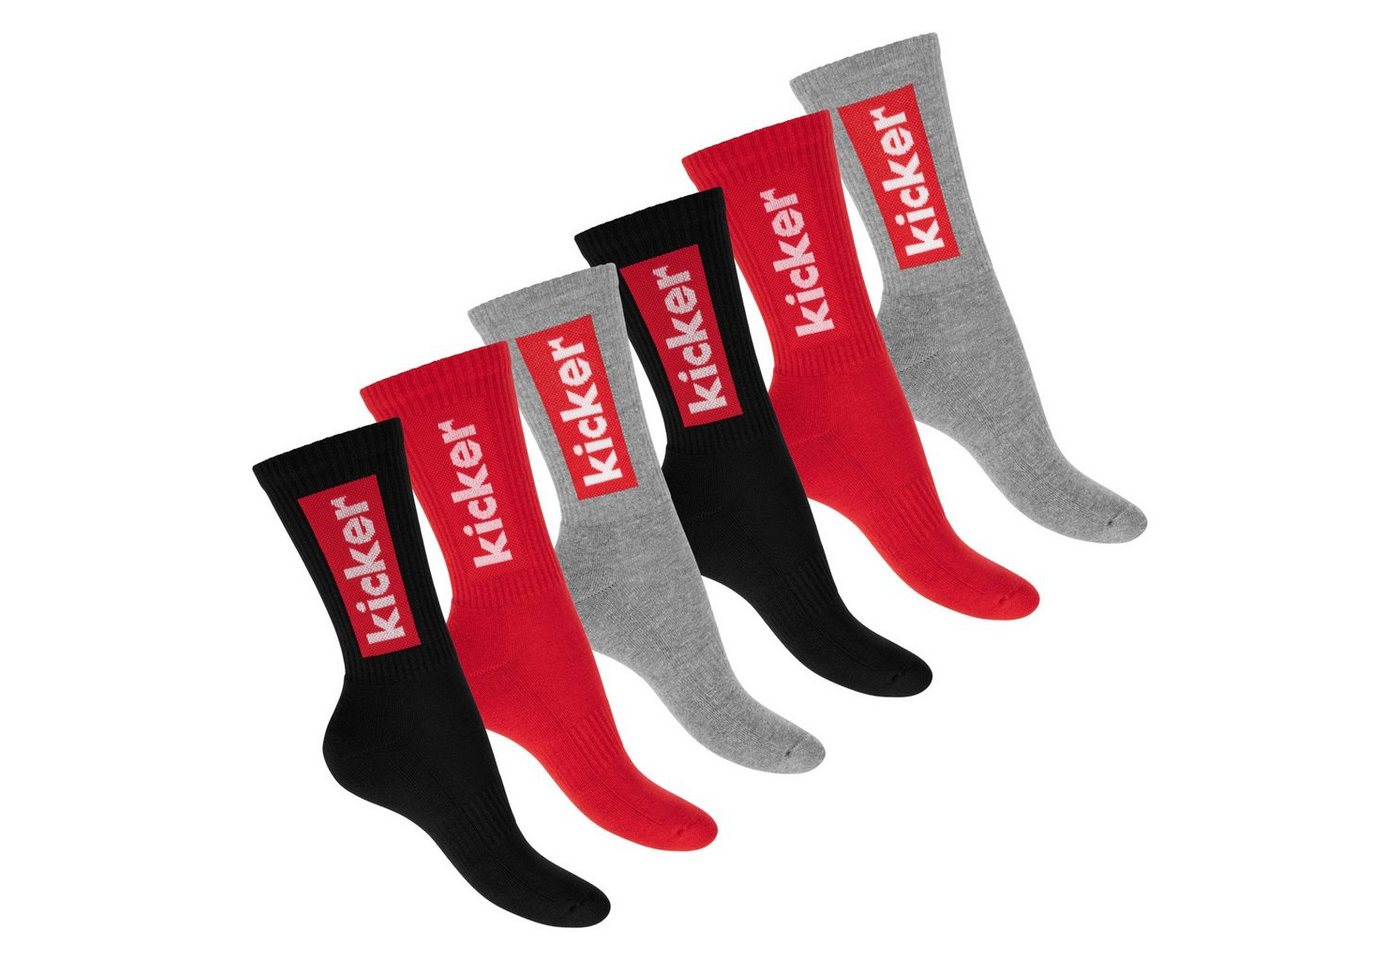 Kicker Tennissocken kicker Damen & Herren Crew Socks (6 Paar) Schwarz Rot Grau 35-38 (6-Paar) von Kicker